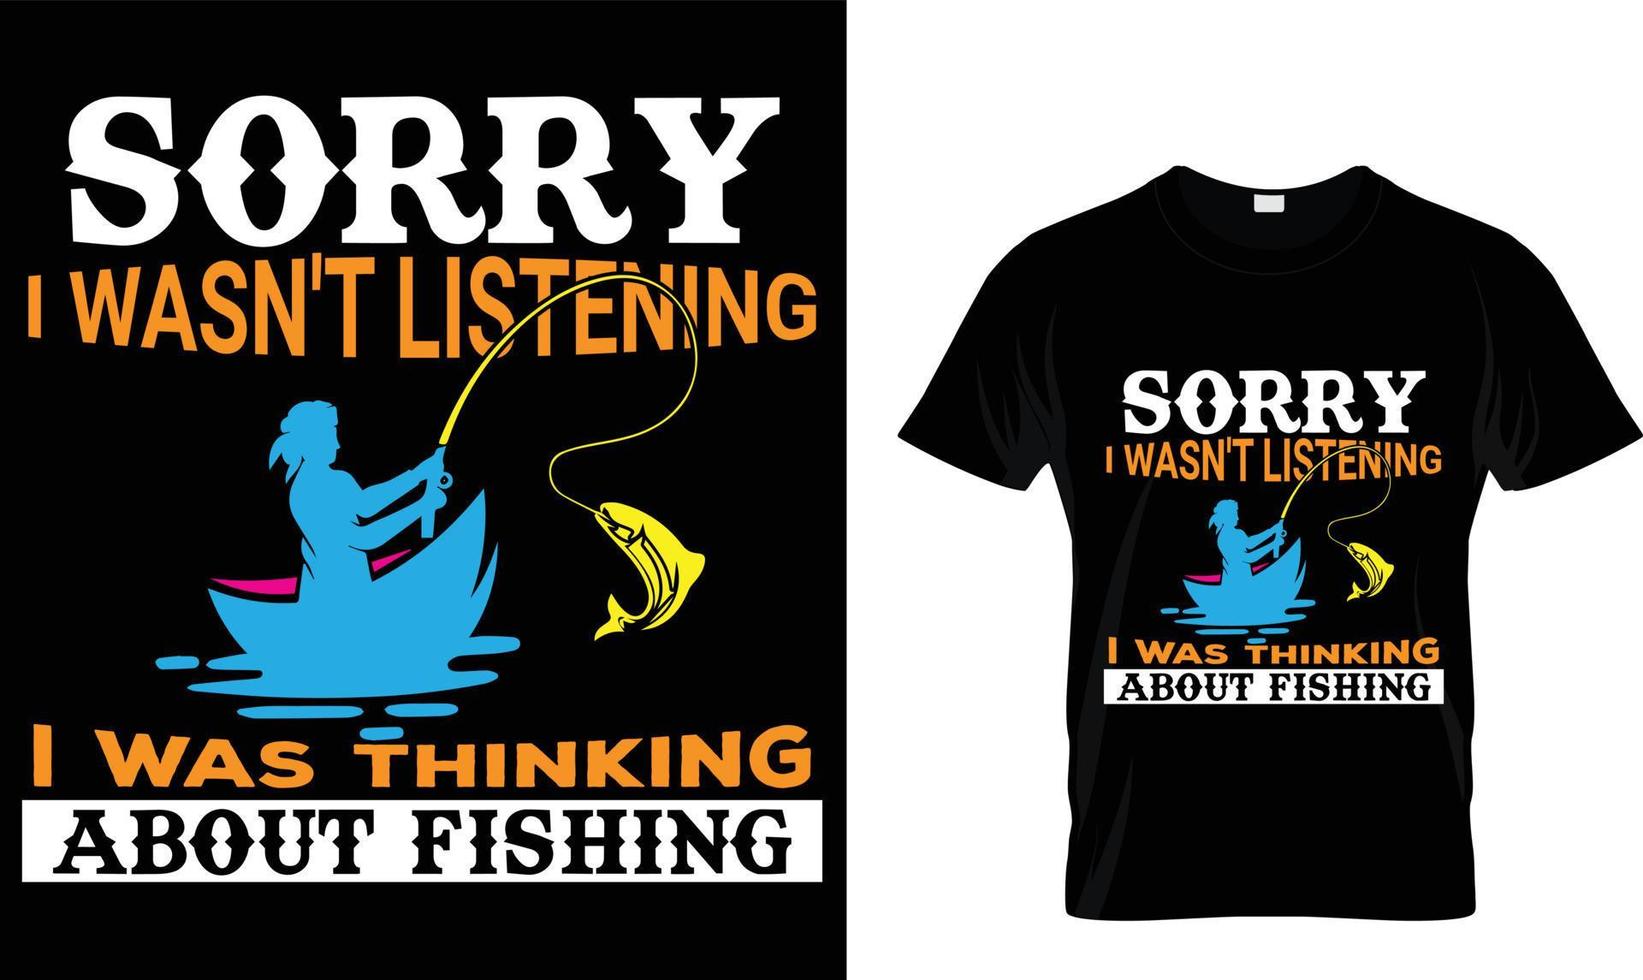 Sorry I wasn't listening ...T-shirt design. vector